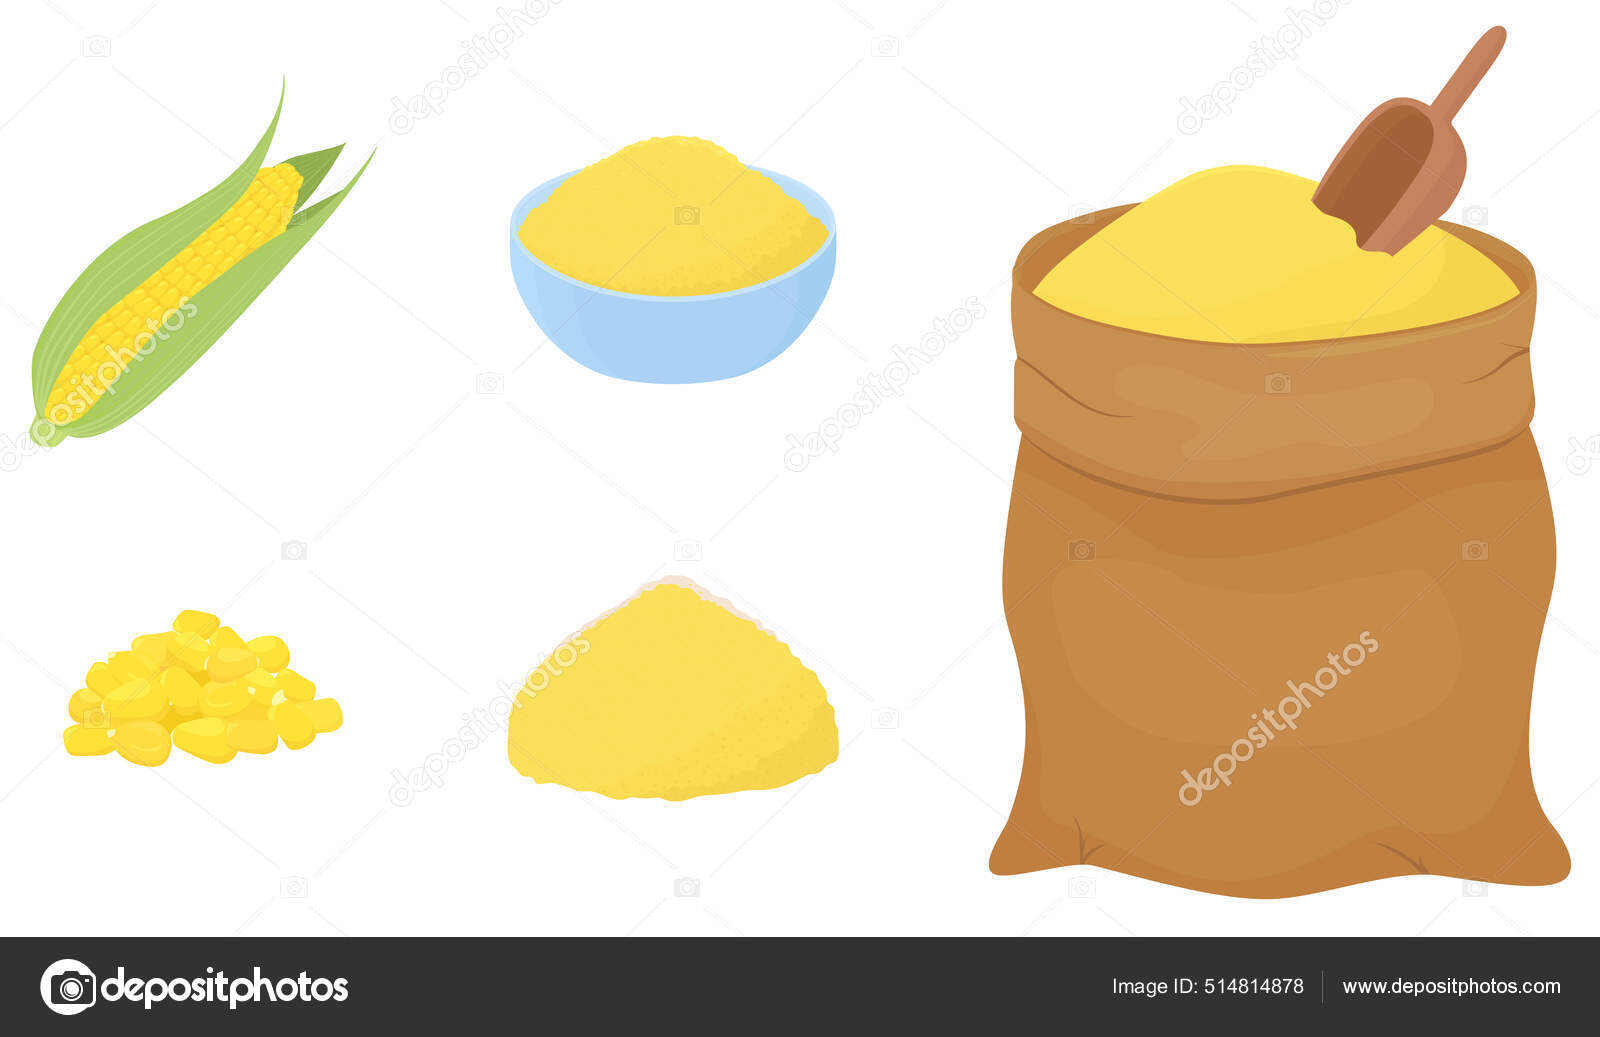 https://st.depositphotos.com/3127023/51481/v/1600/depositphotos_514814878-stock-illustration-corn-yellow-flour-heap-sack.jpg